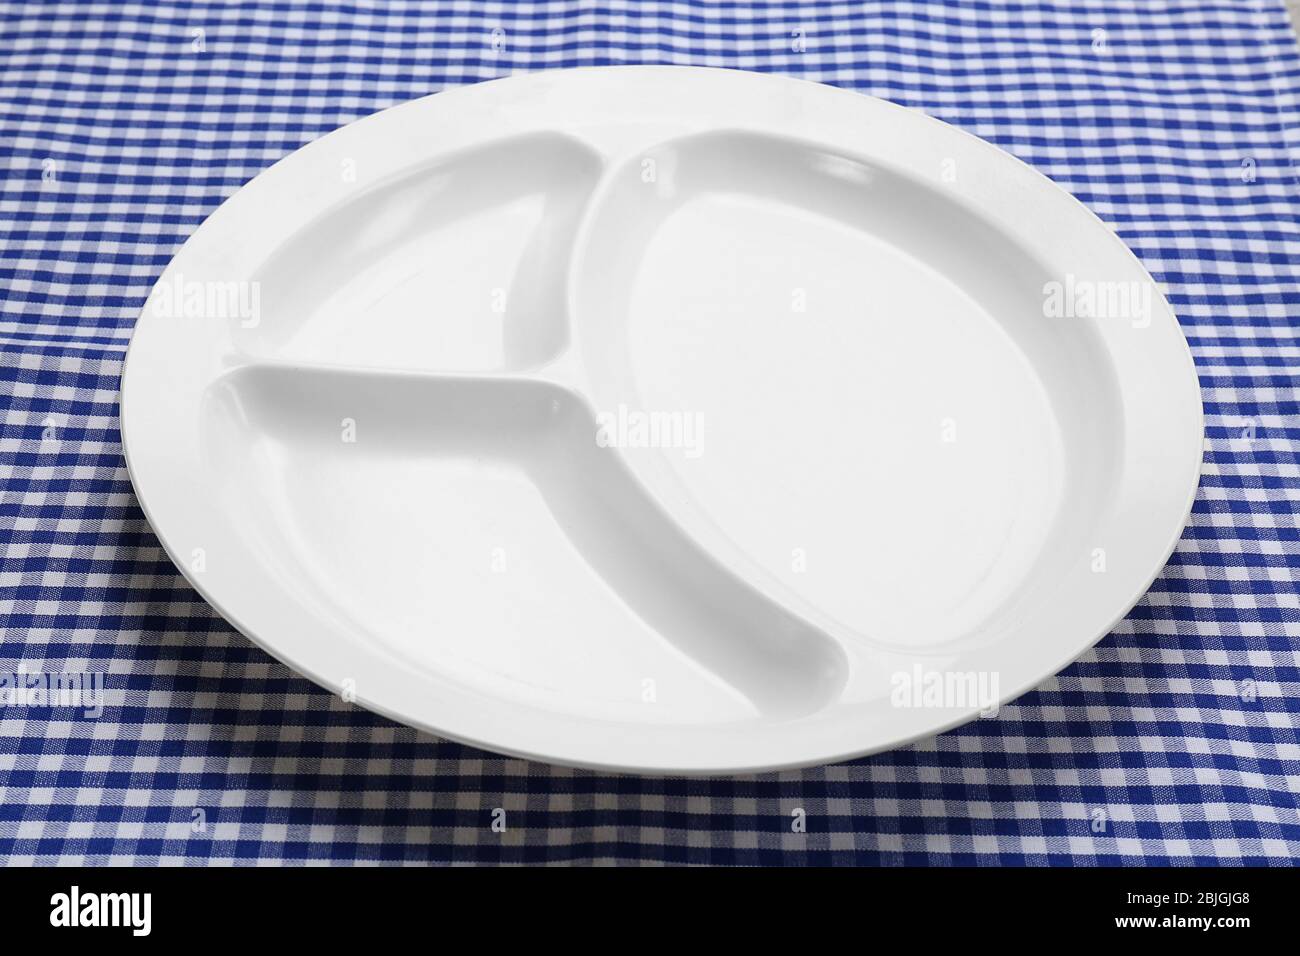 https://c8.alamy.com/comp/2BJGJG8/empty-serving-tray-for-food-on-tablecloth-concept-of-school-lunch-2BJGJG8.jpg